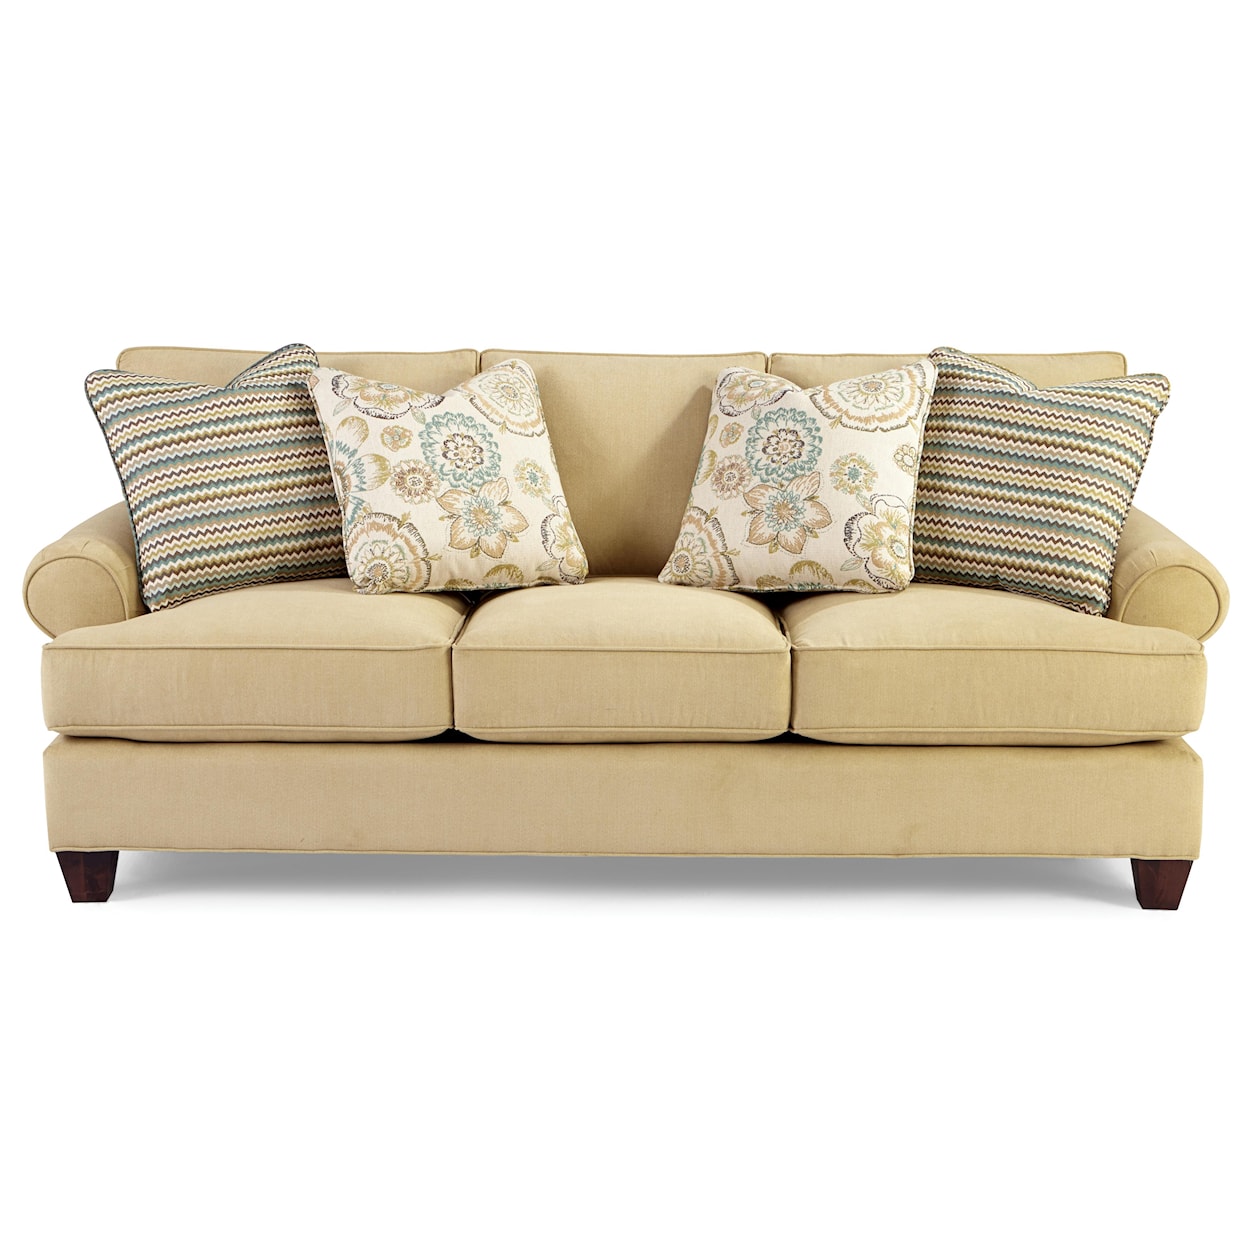 Paula Deen by Craftmaster P9 Custom Upholstery Customizable Sofa